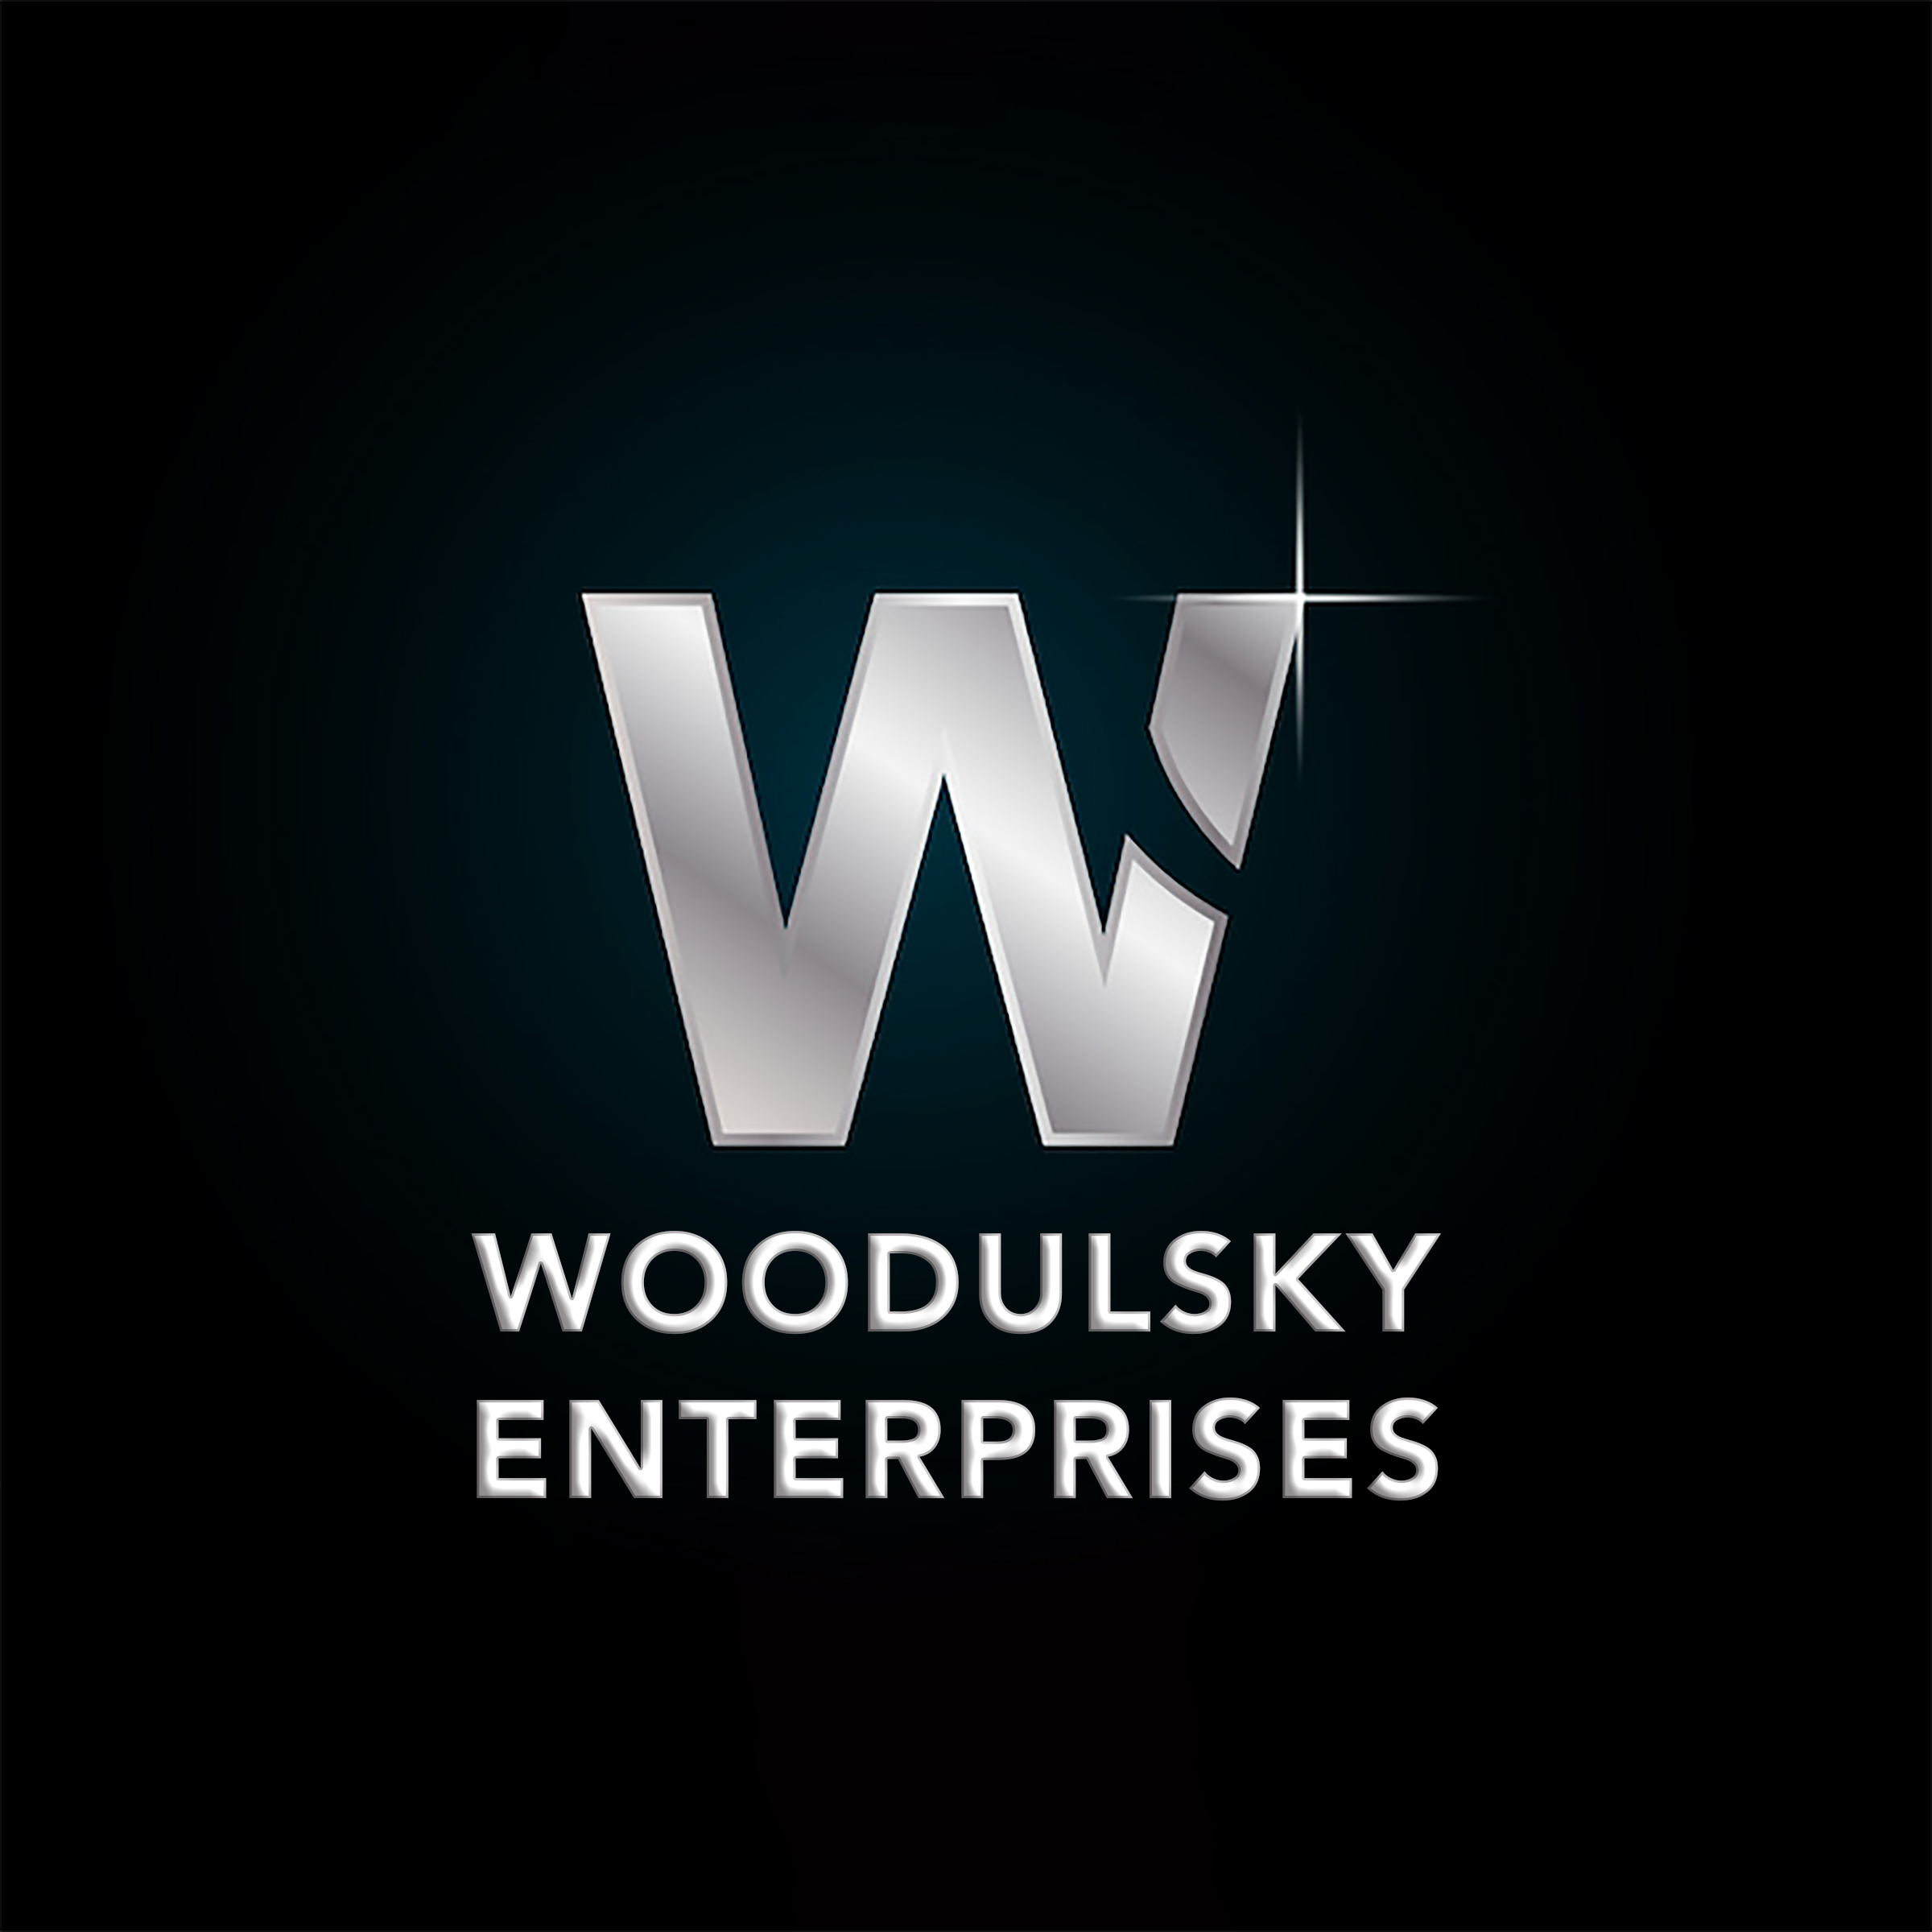 Woodulsky Enterprises